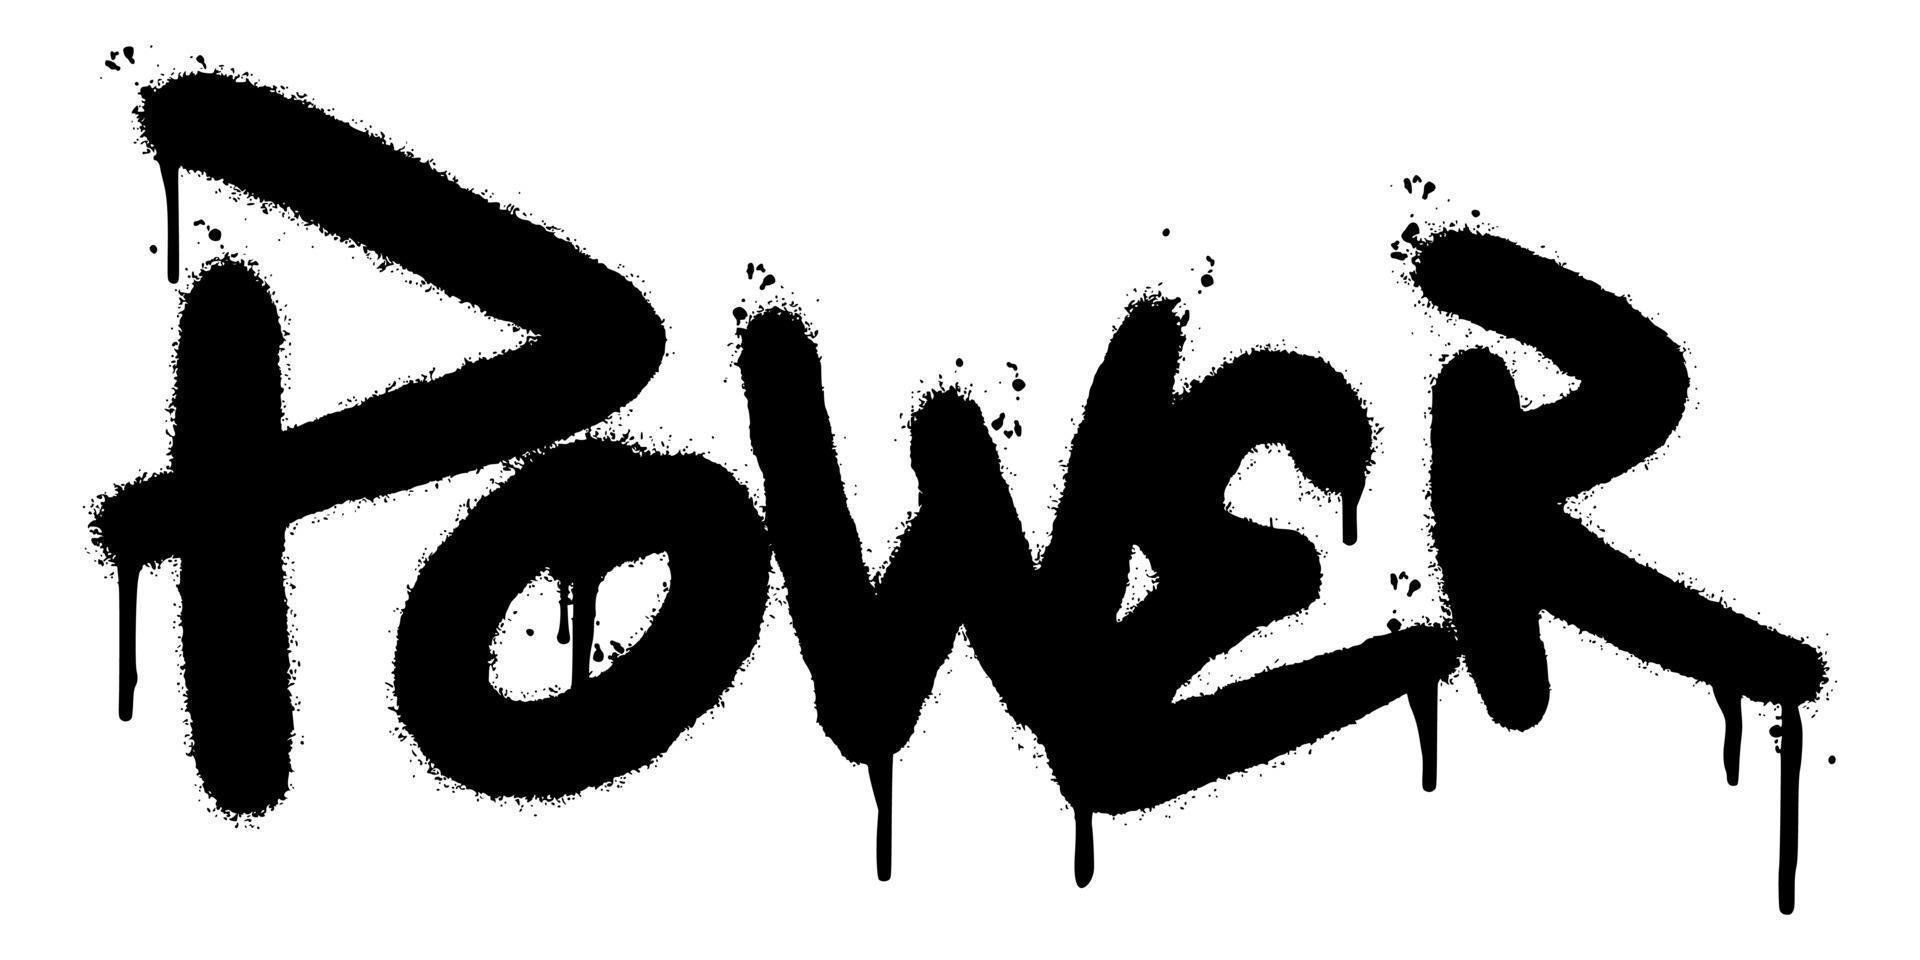 graffiti Power word sprayed isolated on white background. Sprayed Power font graffiti. vector illustration.